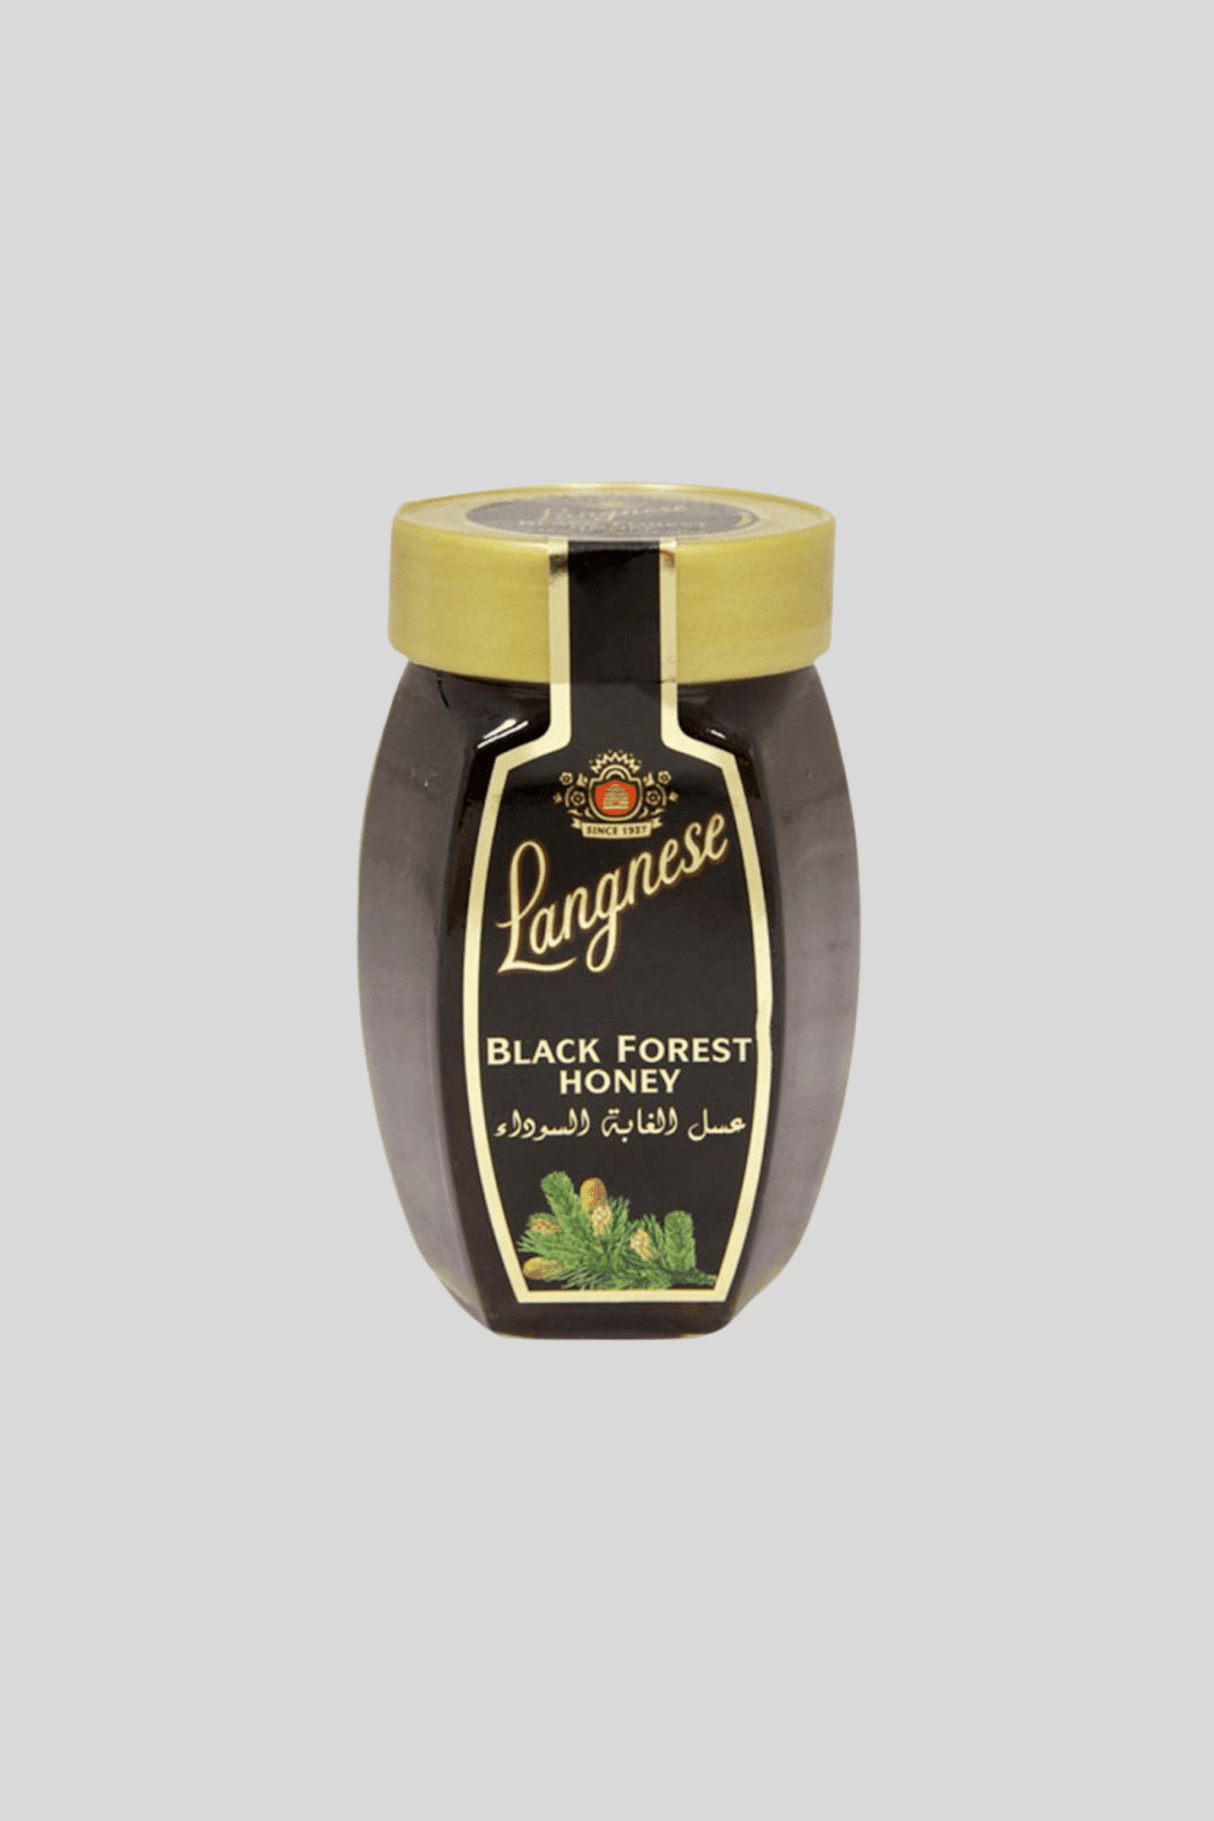 langnese honey black forest 1kg